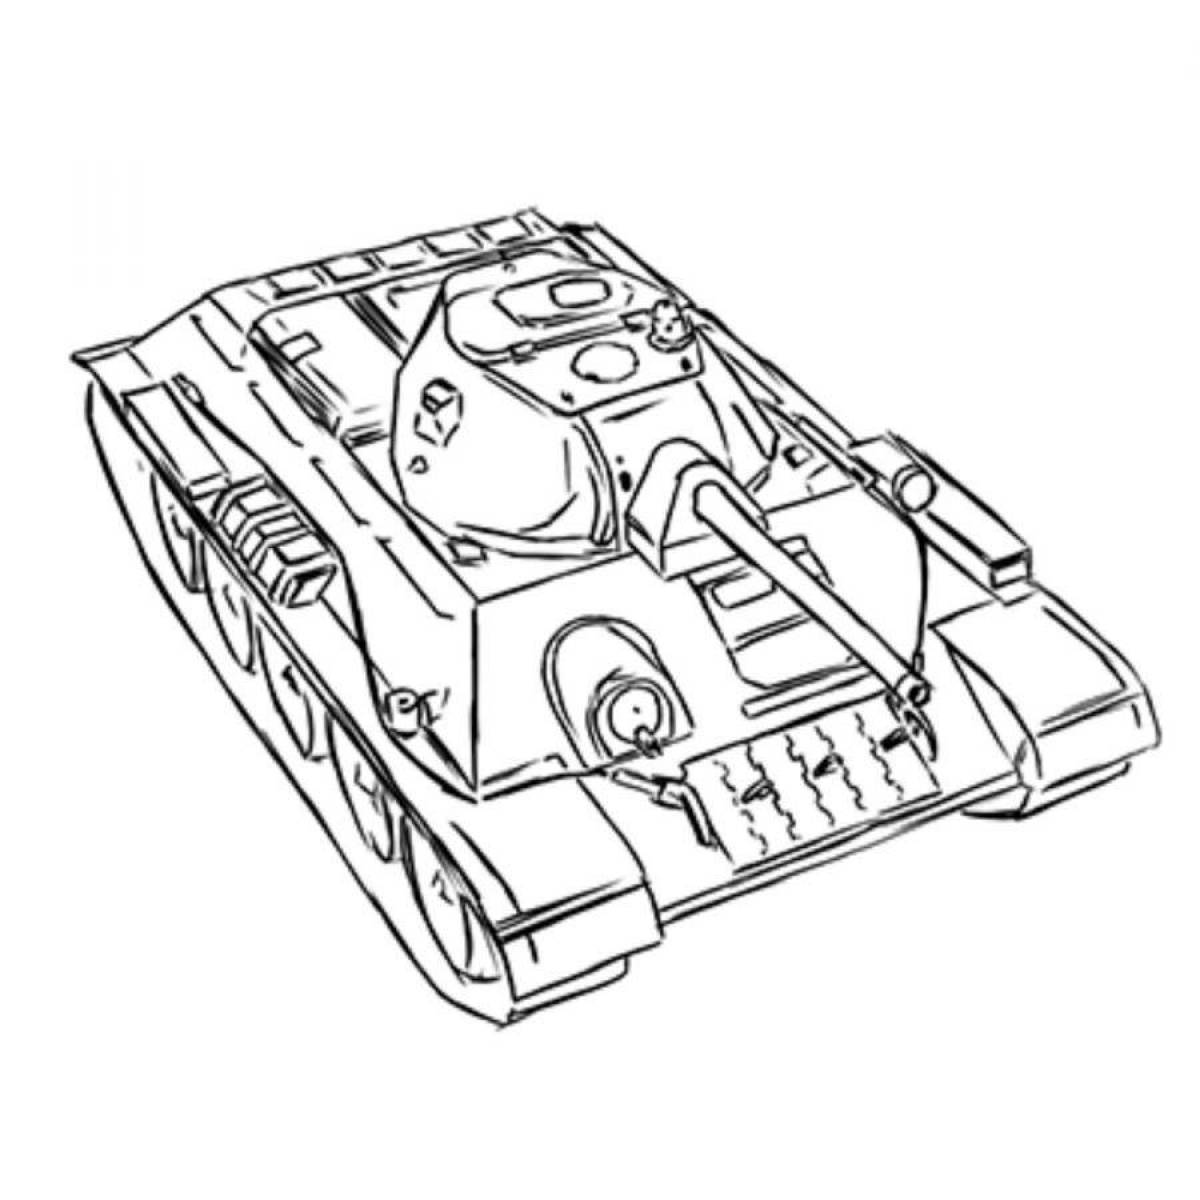 Раскраска гранд танк т 34